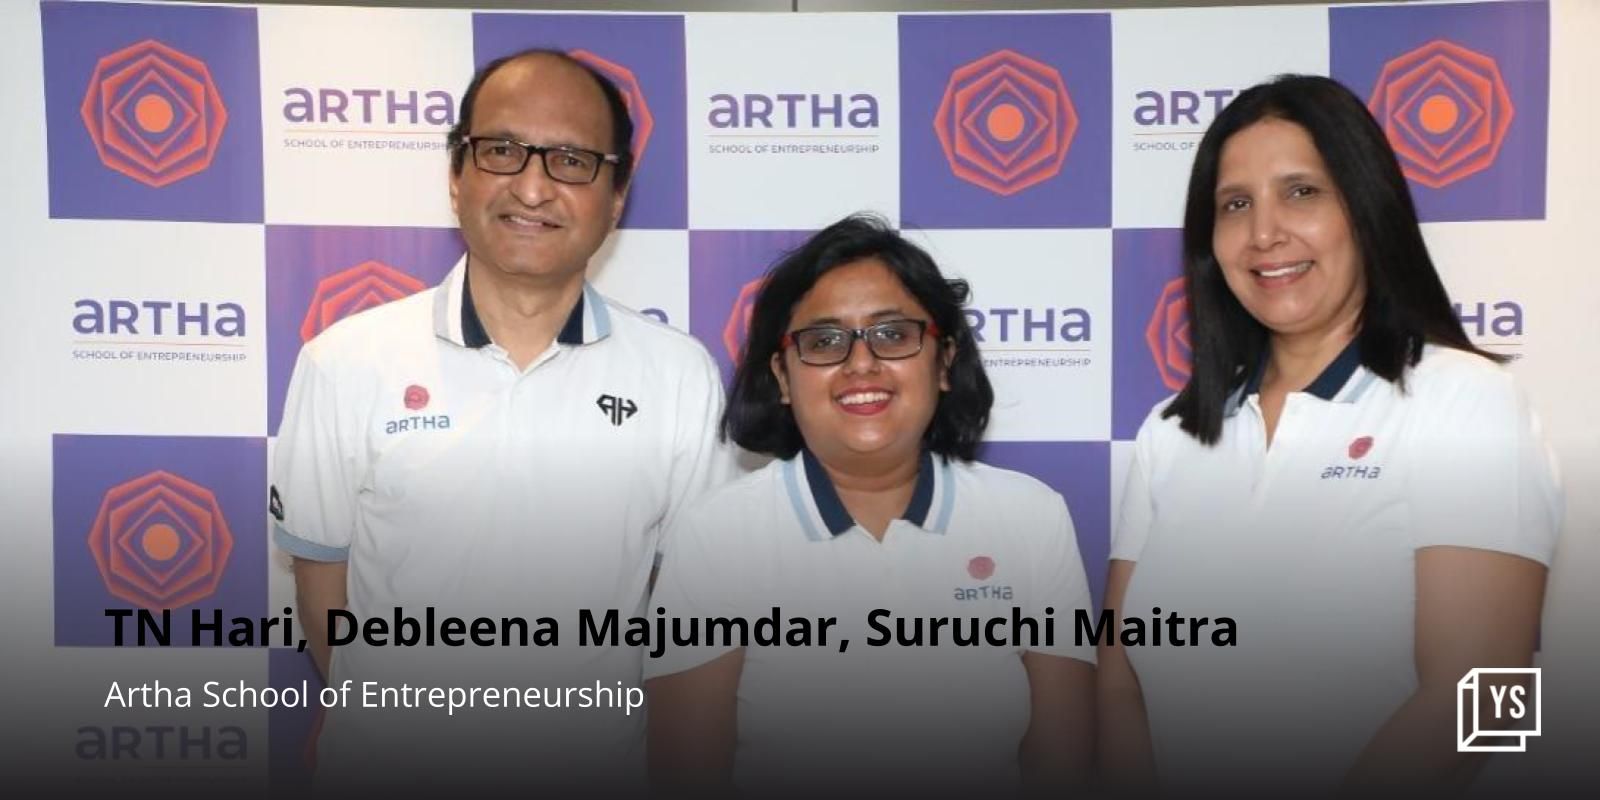 India’s veteran startup leaders launch Artha, a school for entrepreneurs